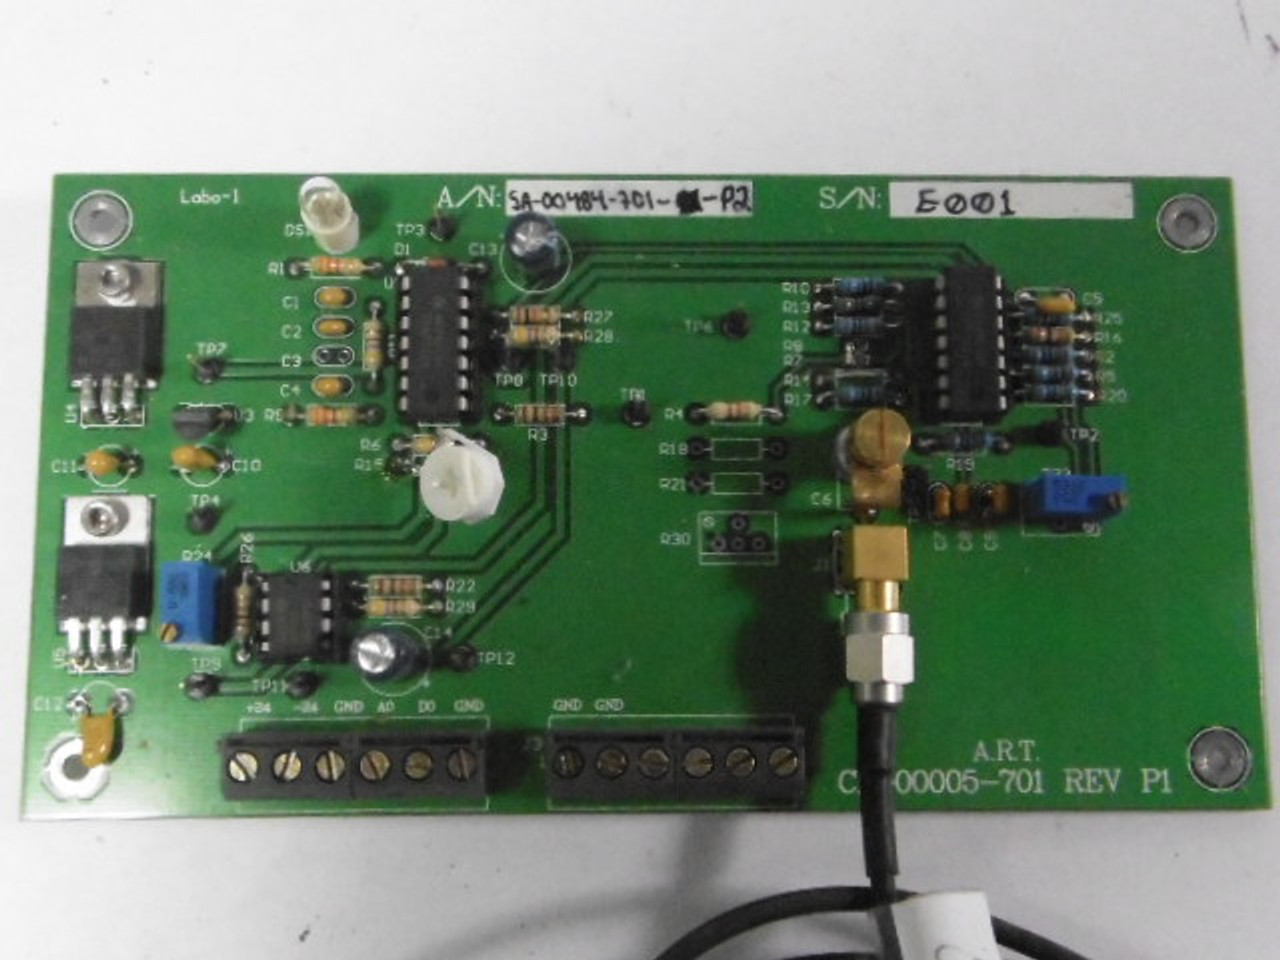 Advanced Research Technologies SA-00484-701-P2 PC Board USED